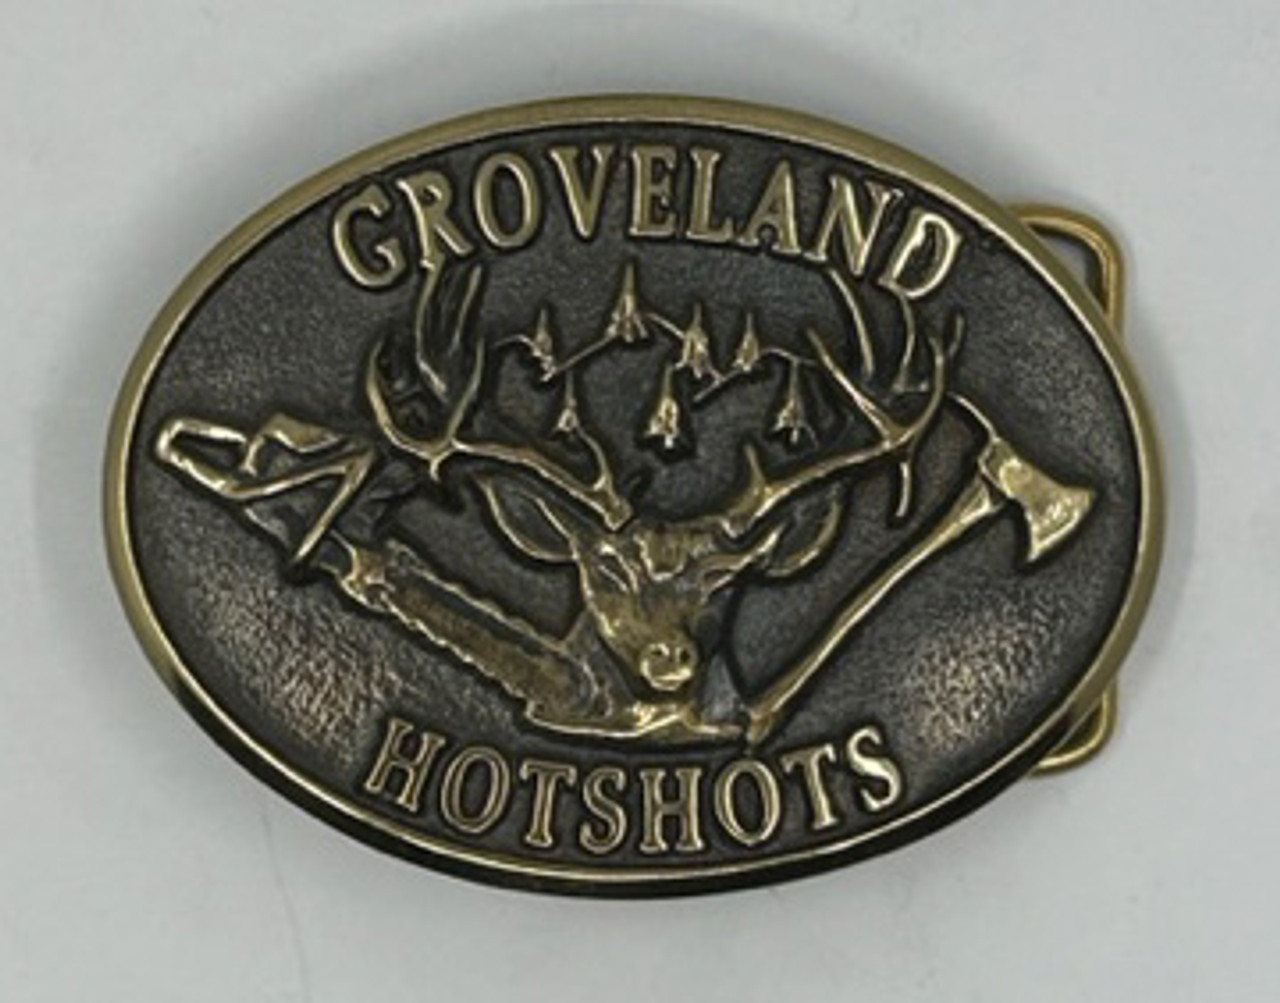 Groveland Hotshots Buckle (RESTRICTED) 